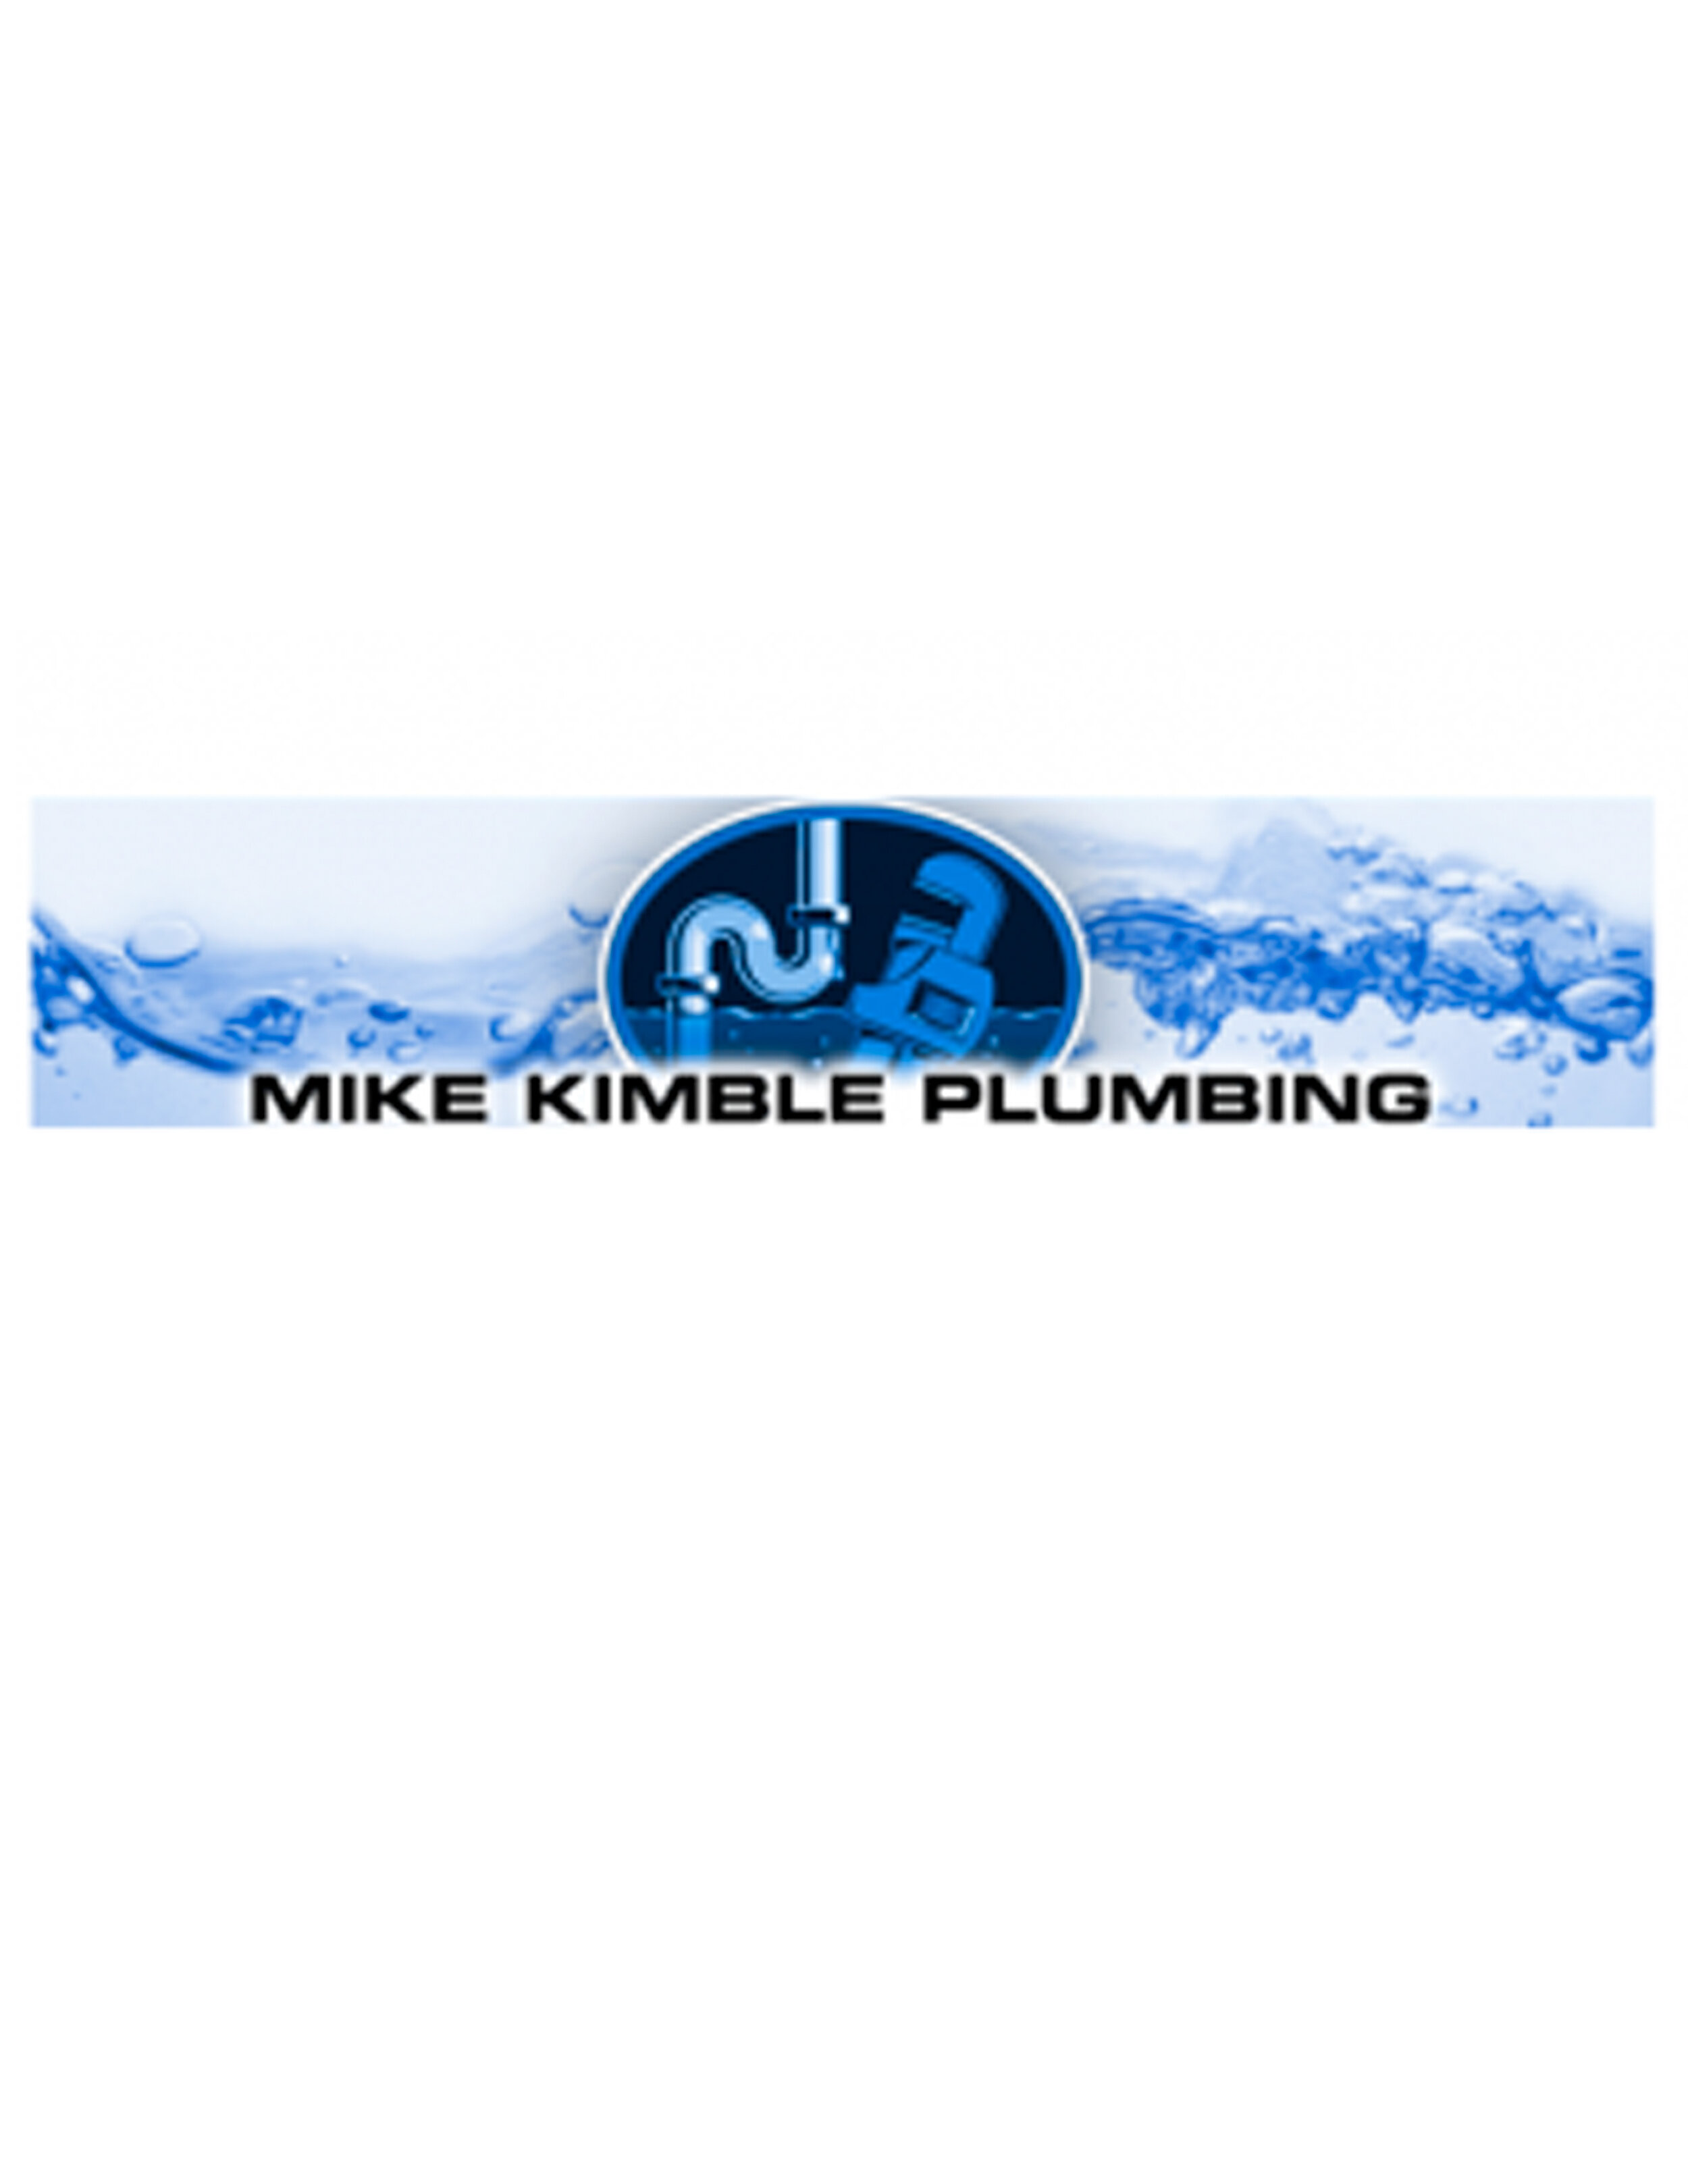 Mike Kimble Plumbing Logo.jpg